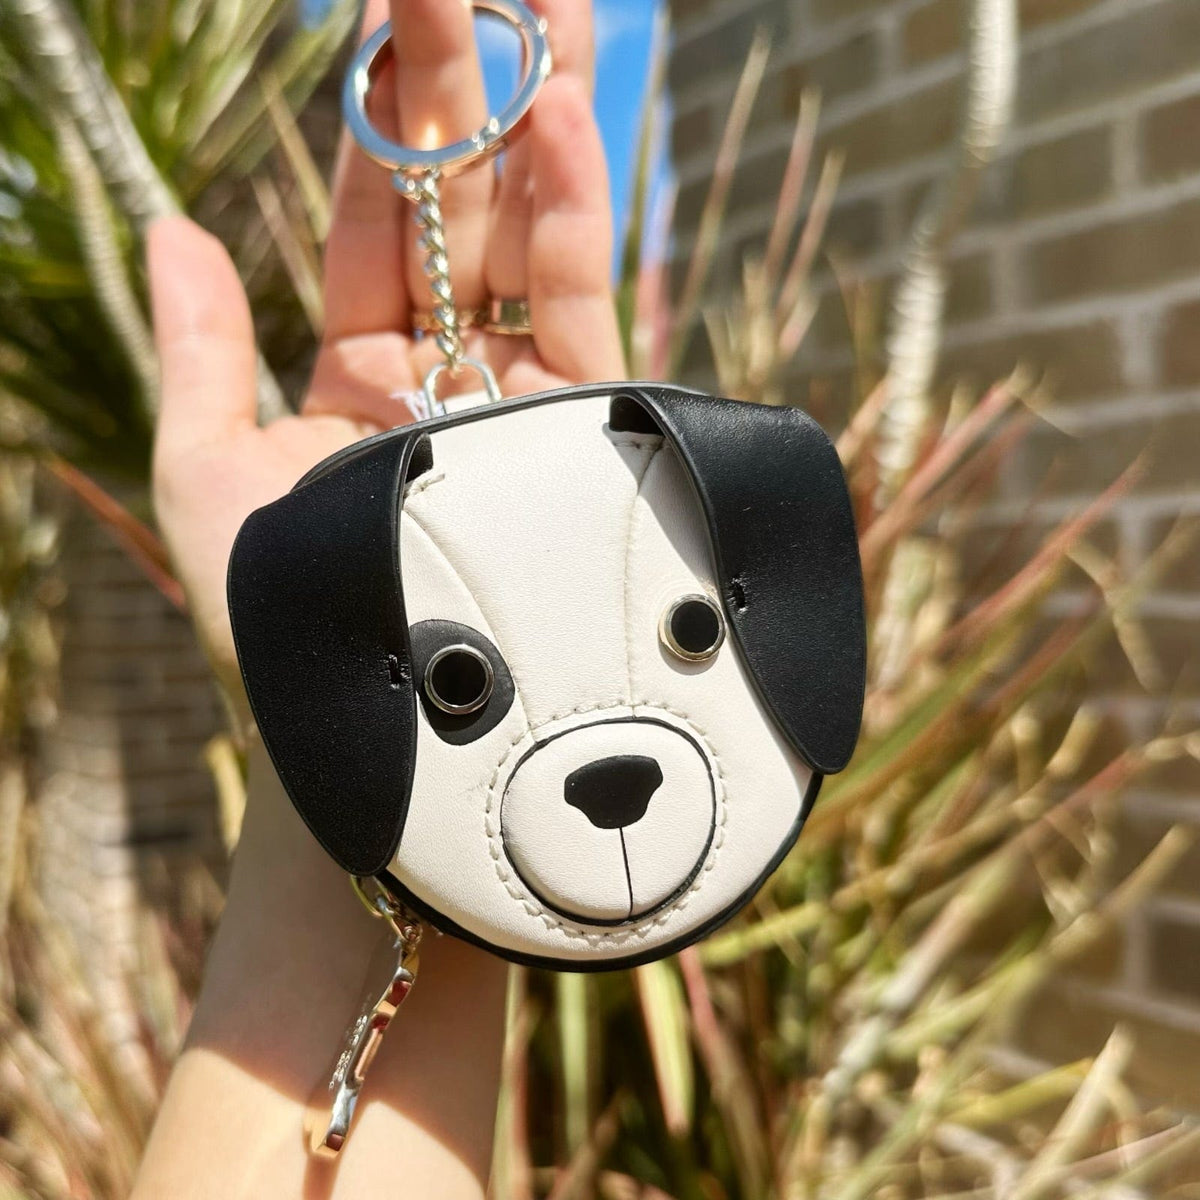 Louis Vuitton Dog Bag Charm - Keychains, Accessories